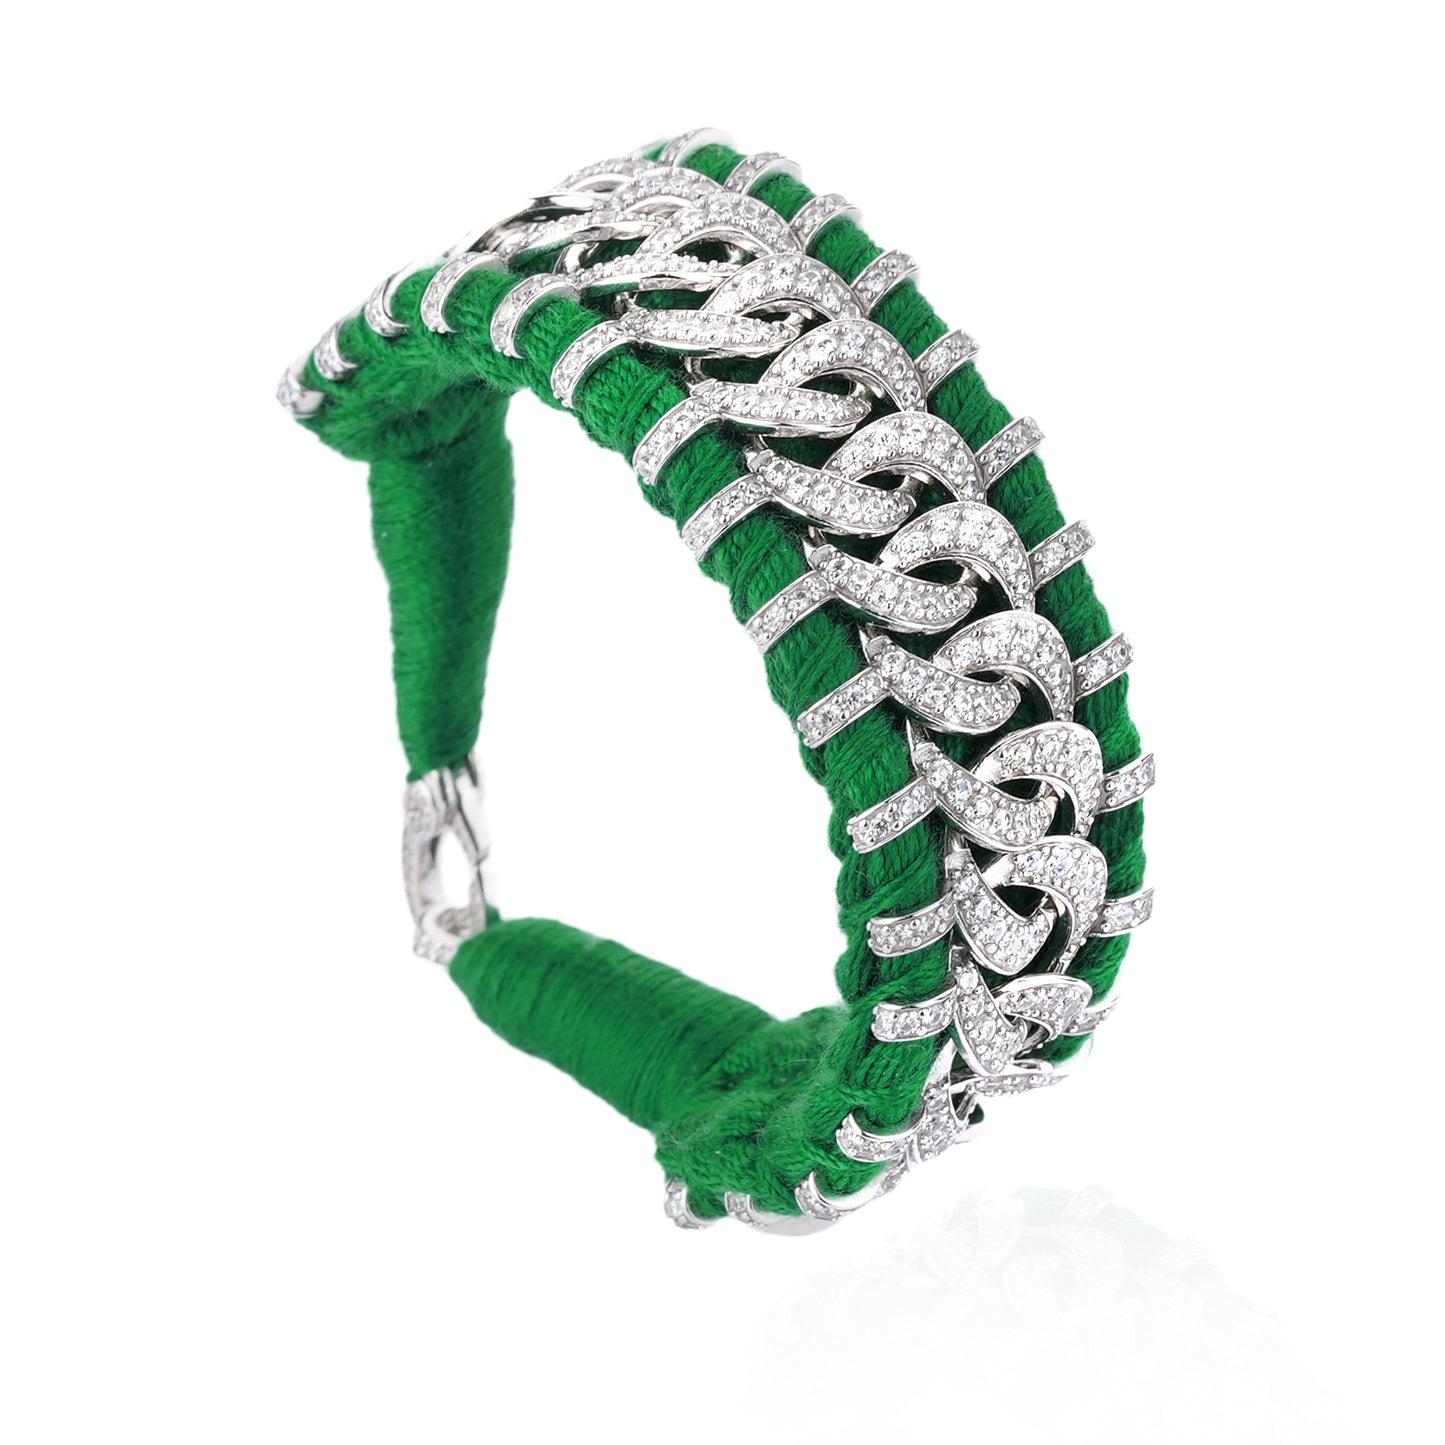 Recife Green bracelet in 925 silver and diamonds